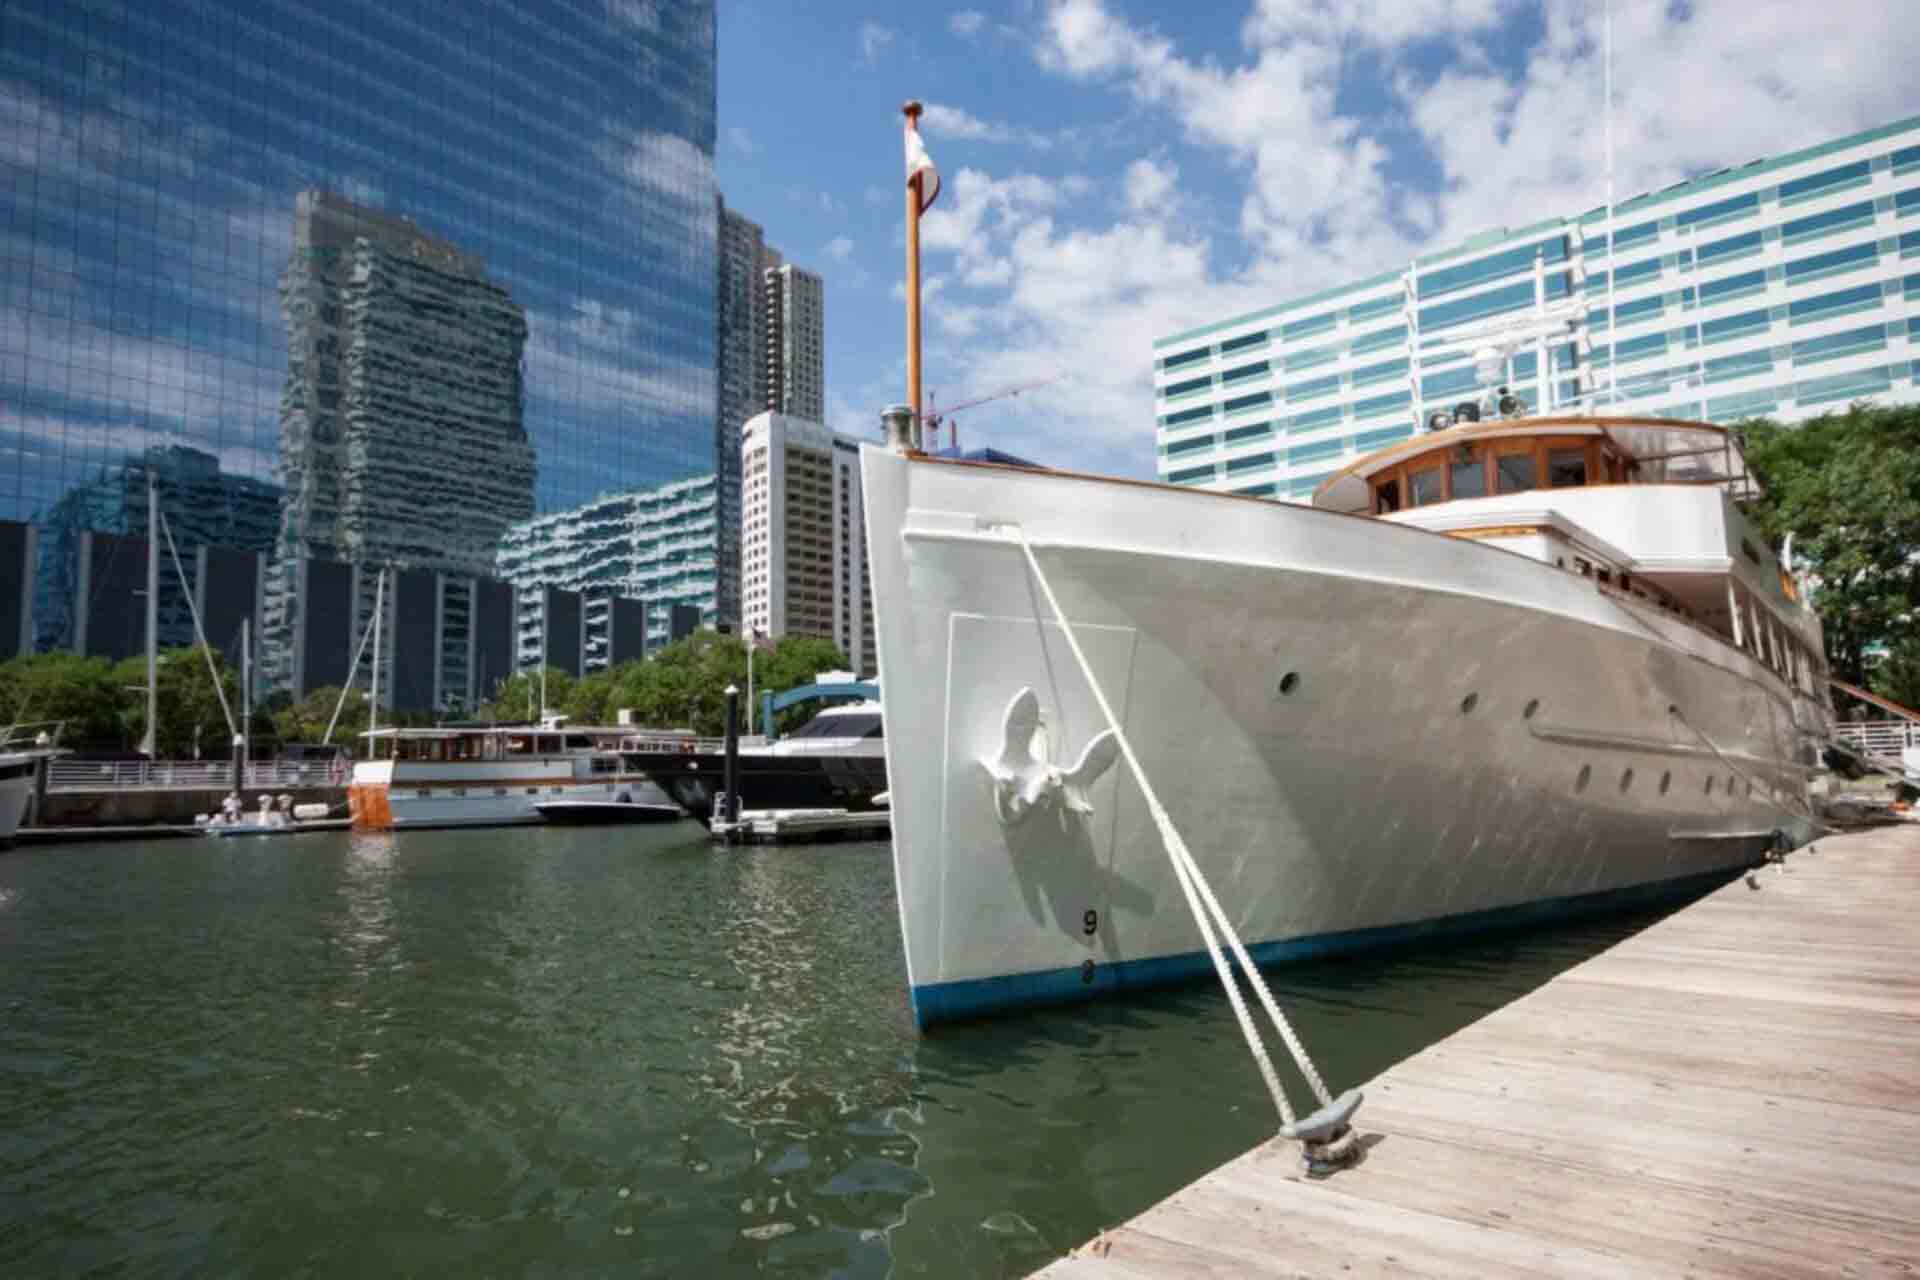 122' Hamptons Event Yacht